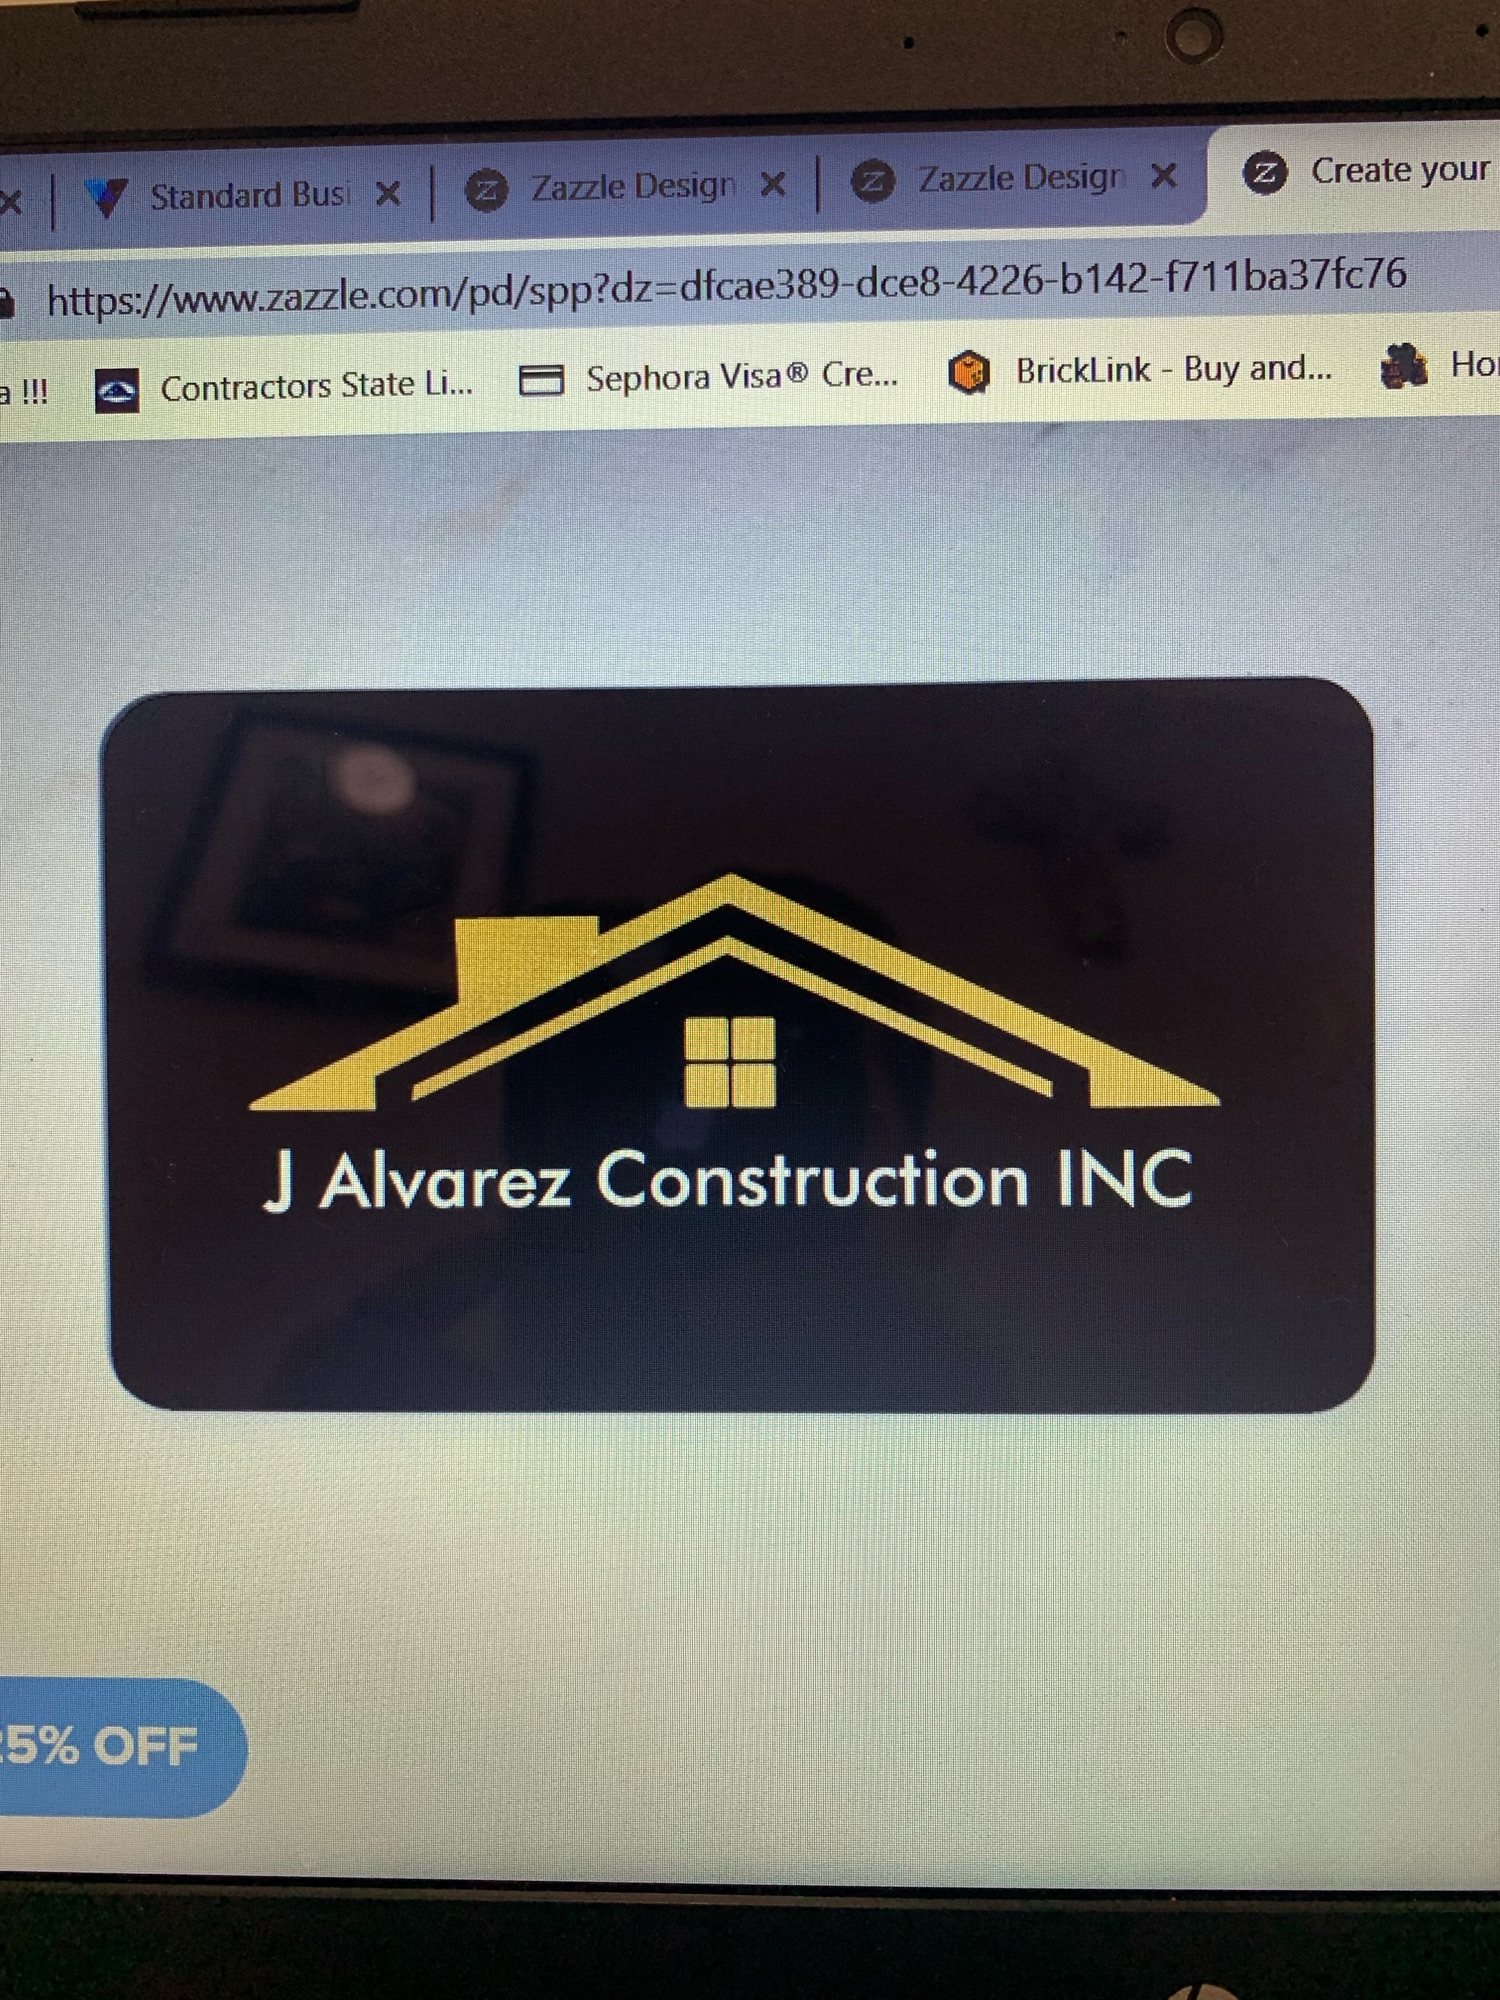 J Alvarez Construction INC Logo